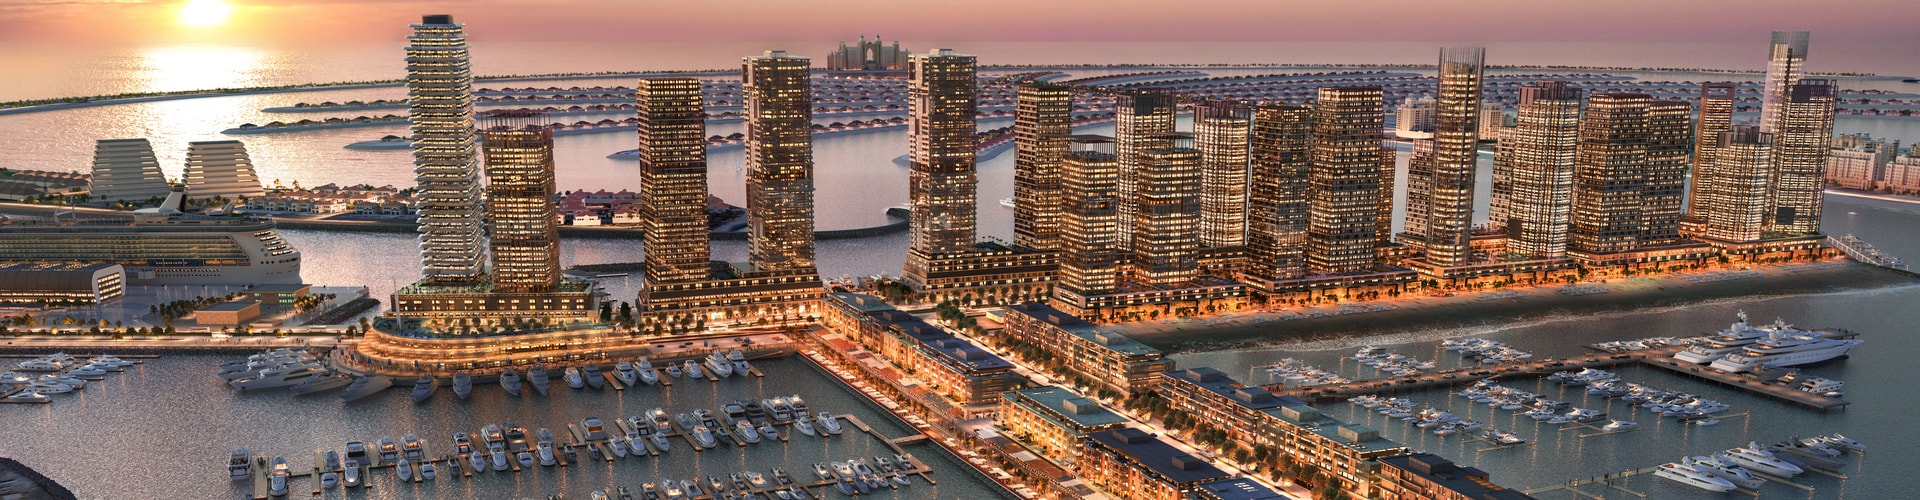 Dubai set to become a global capital for luxury yachts marinas